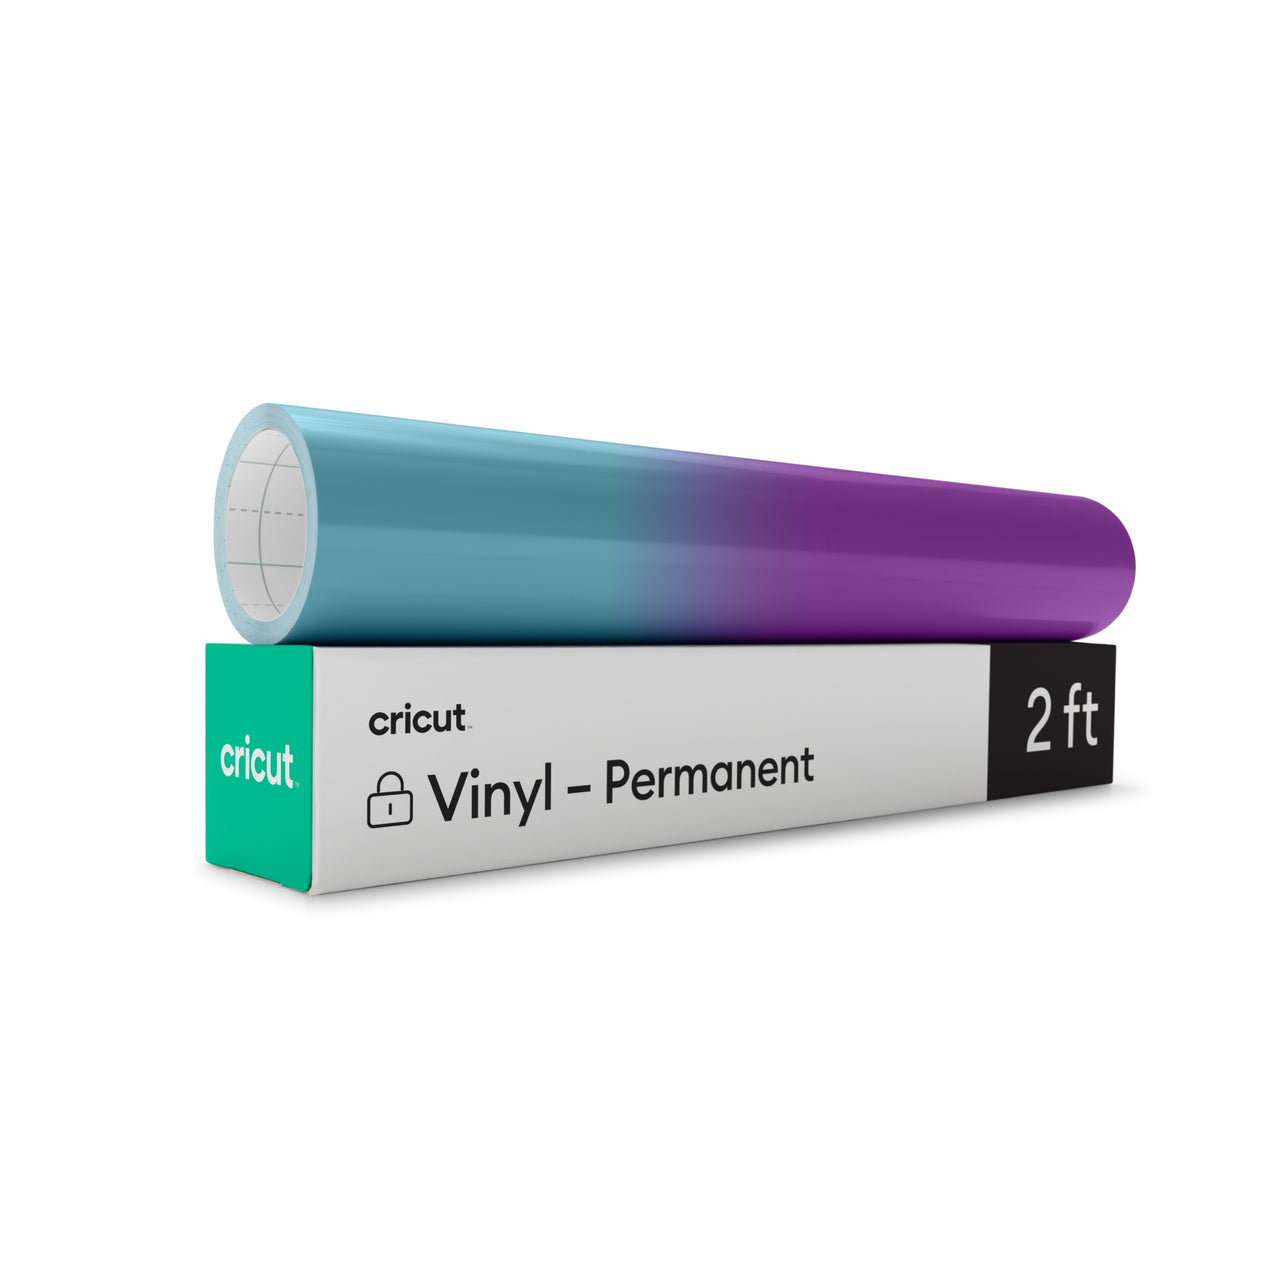 Cricut Cold-Activated, Color-Changing Vinyl - Permanent Turquoise - Purple